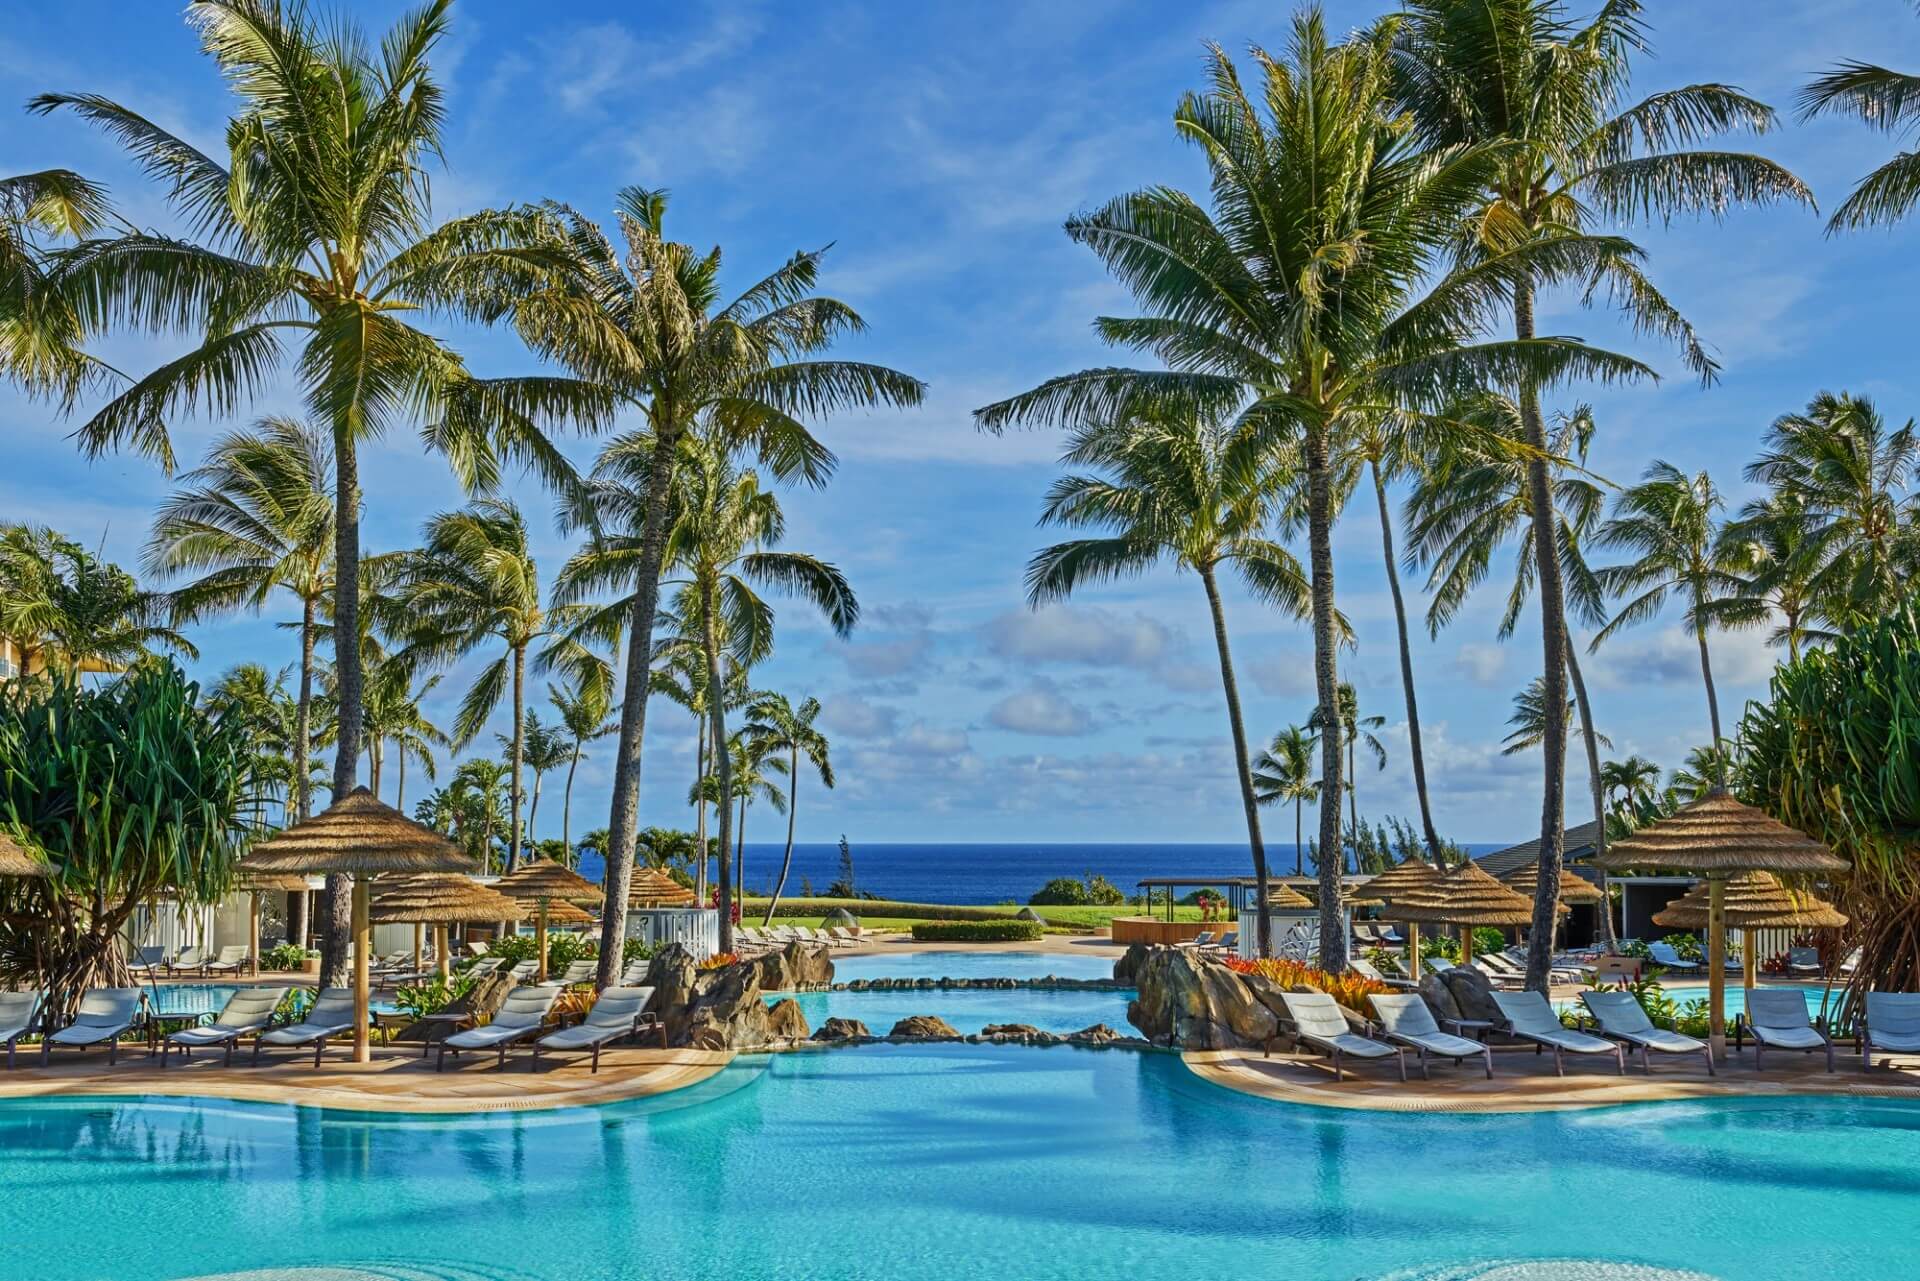 Ritz-Carlton Kapalua pool with oceanfront view